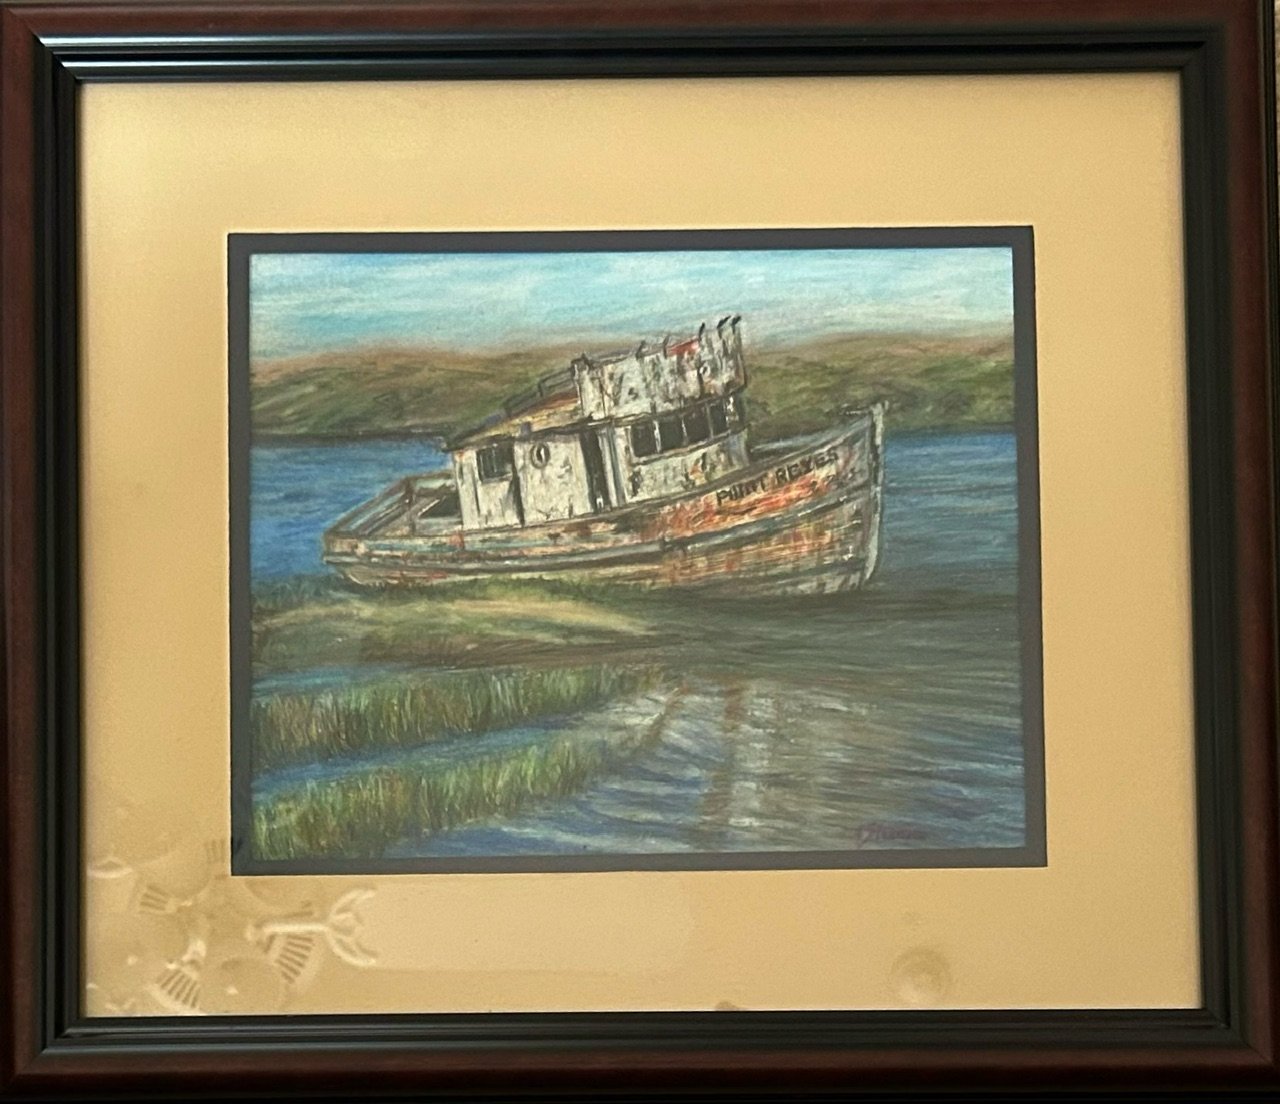 ARLSTU002 - The Boat at Point Reyes by Arlene Stumph.jpeg